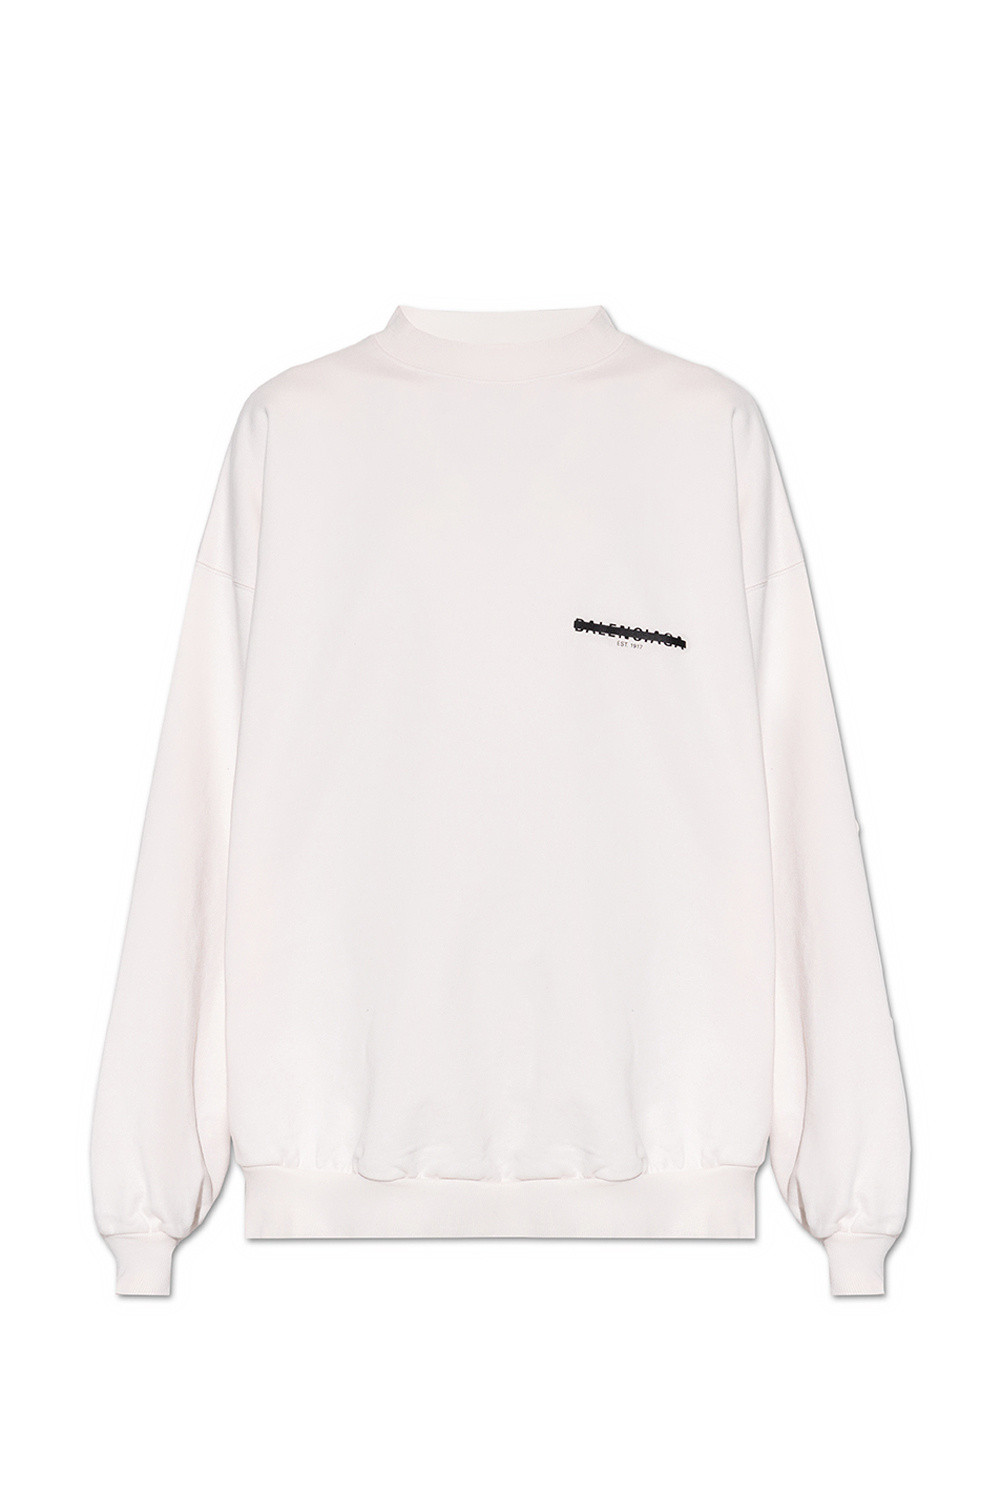 Balenciaga Logo-printed sweatshirt